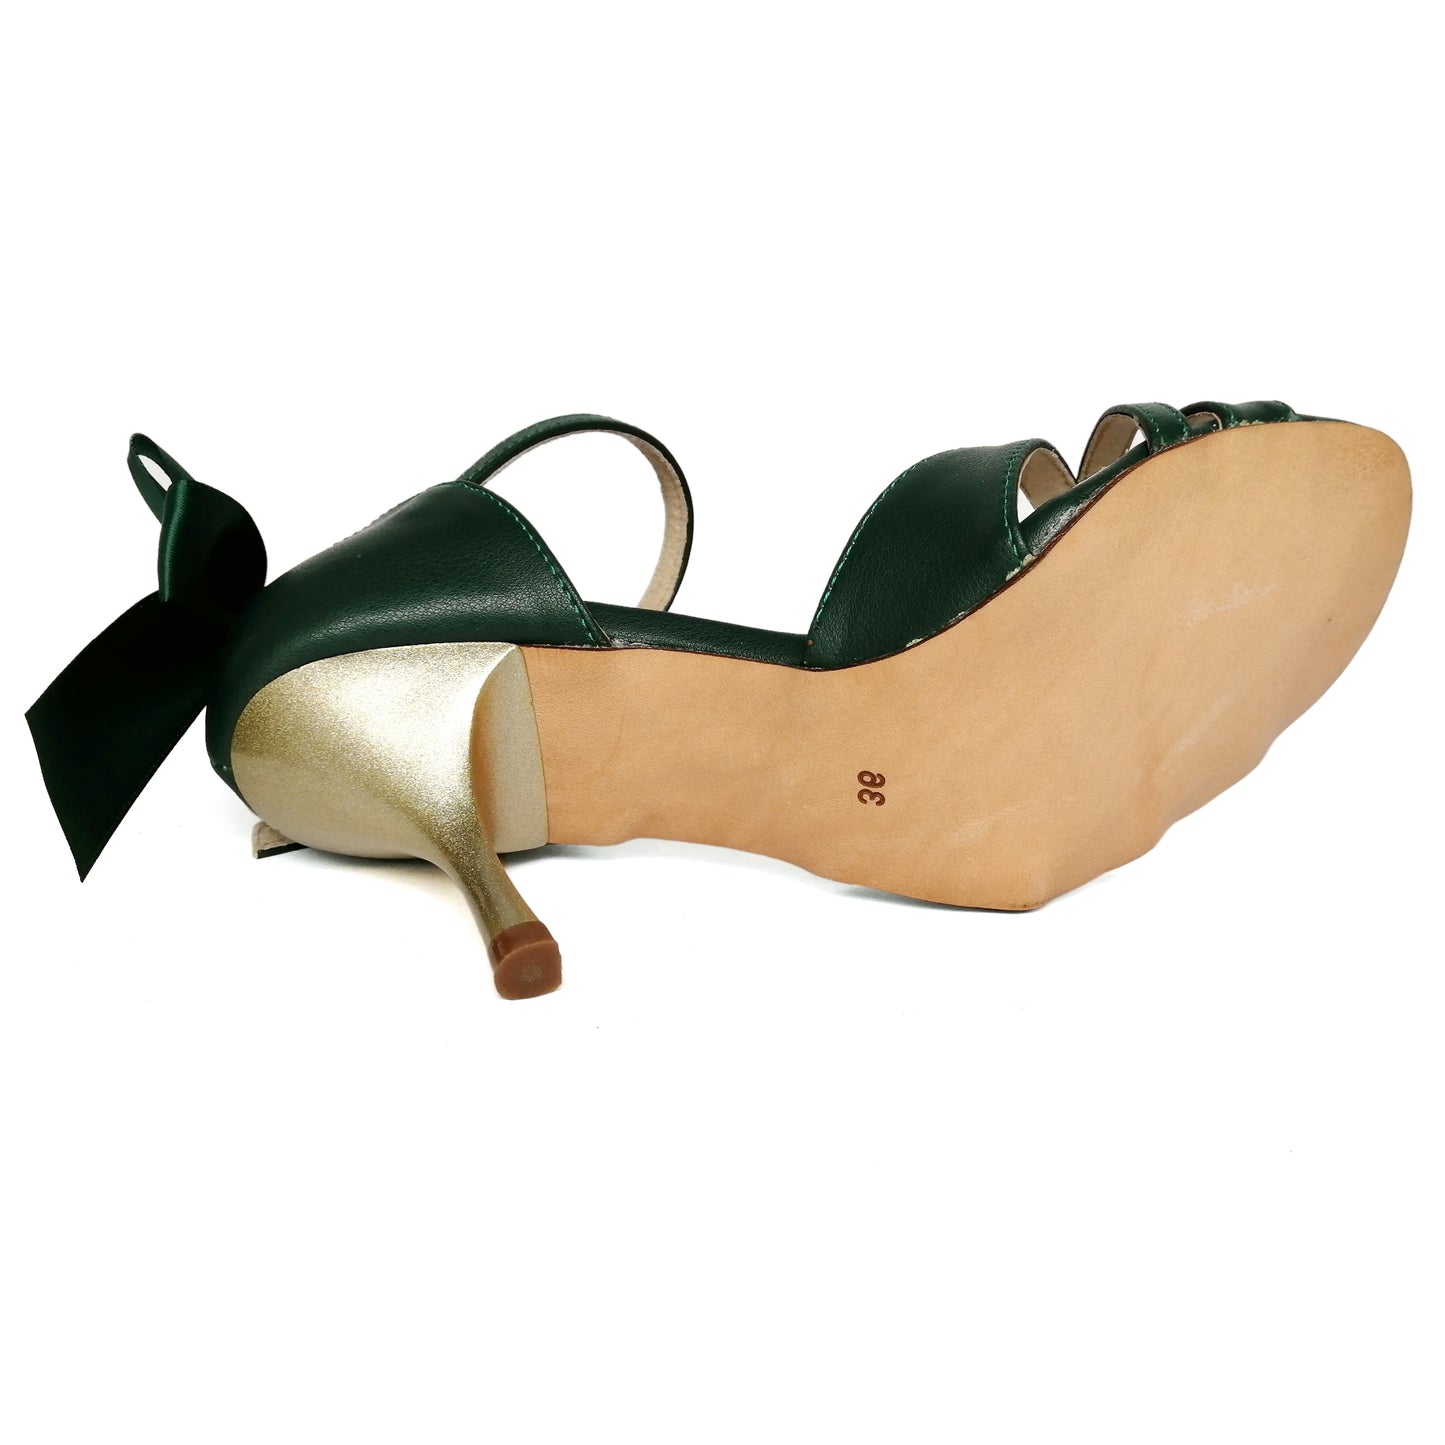 Pro Dancer Women's Argentine Tango Shoes High Heel Dance Sandals Leather Sole Dark Green (PD9016A)